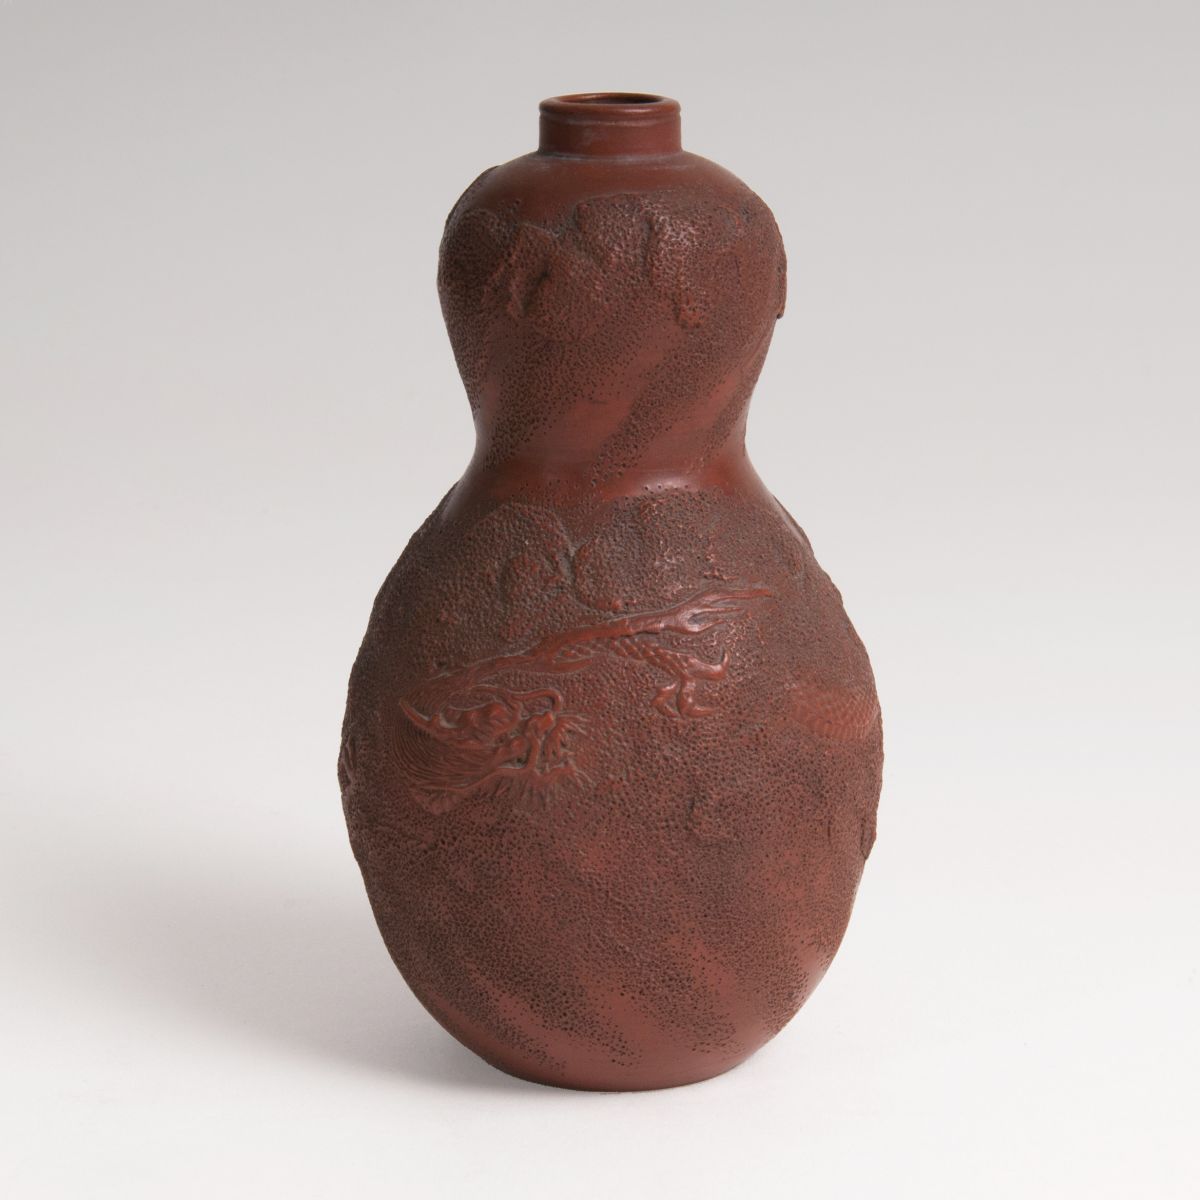 A biwa ceramic vase in calabash shape